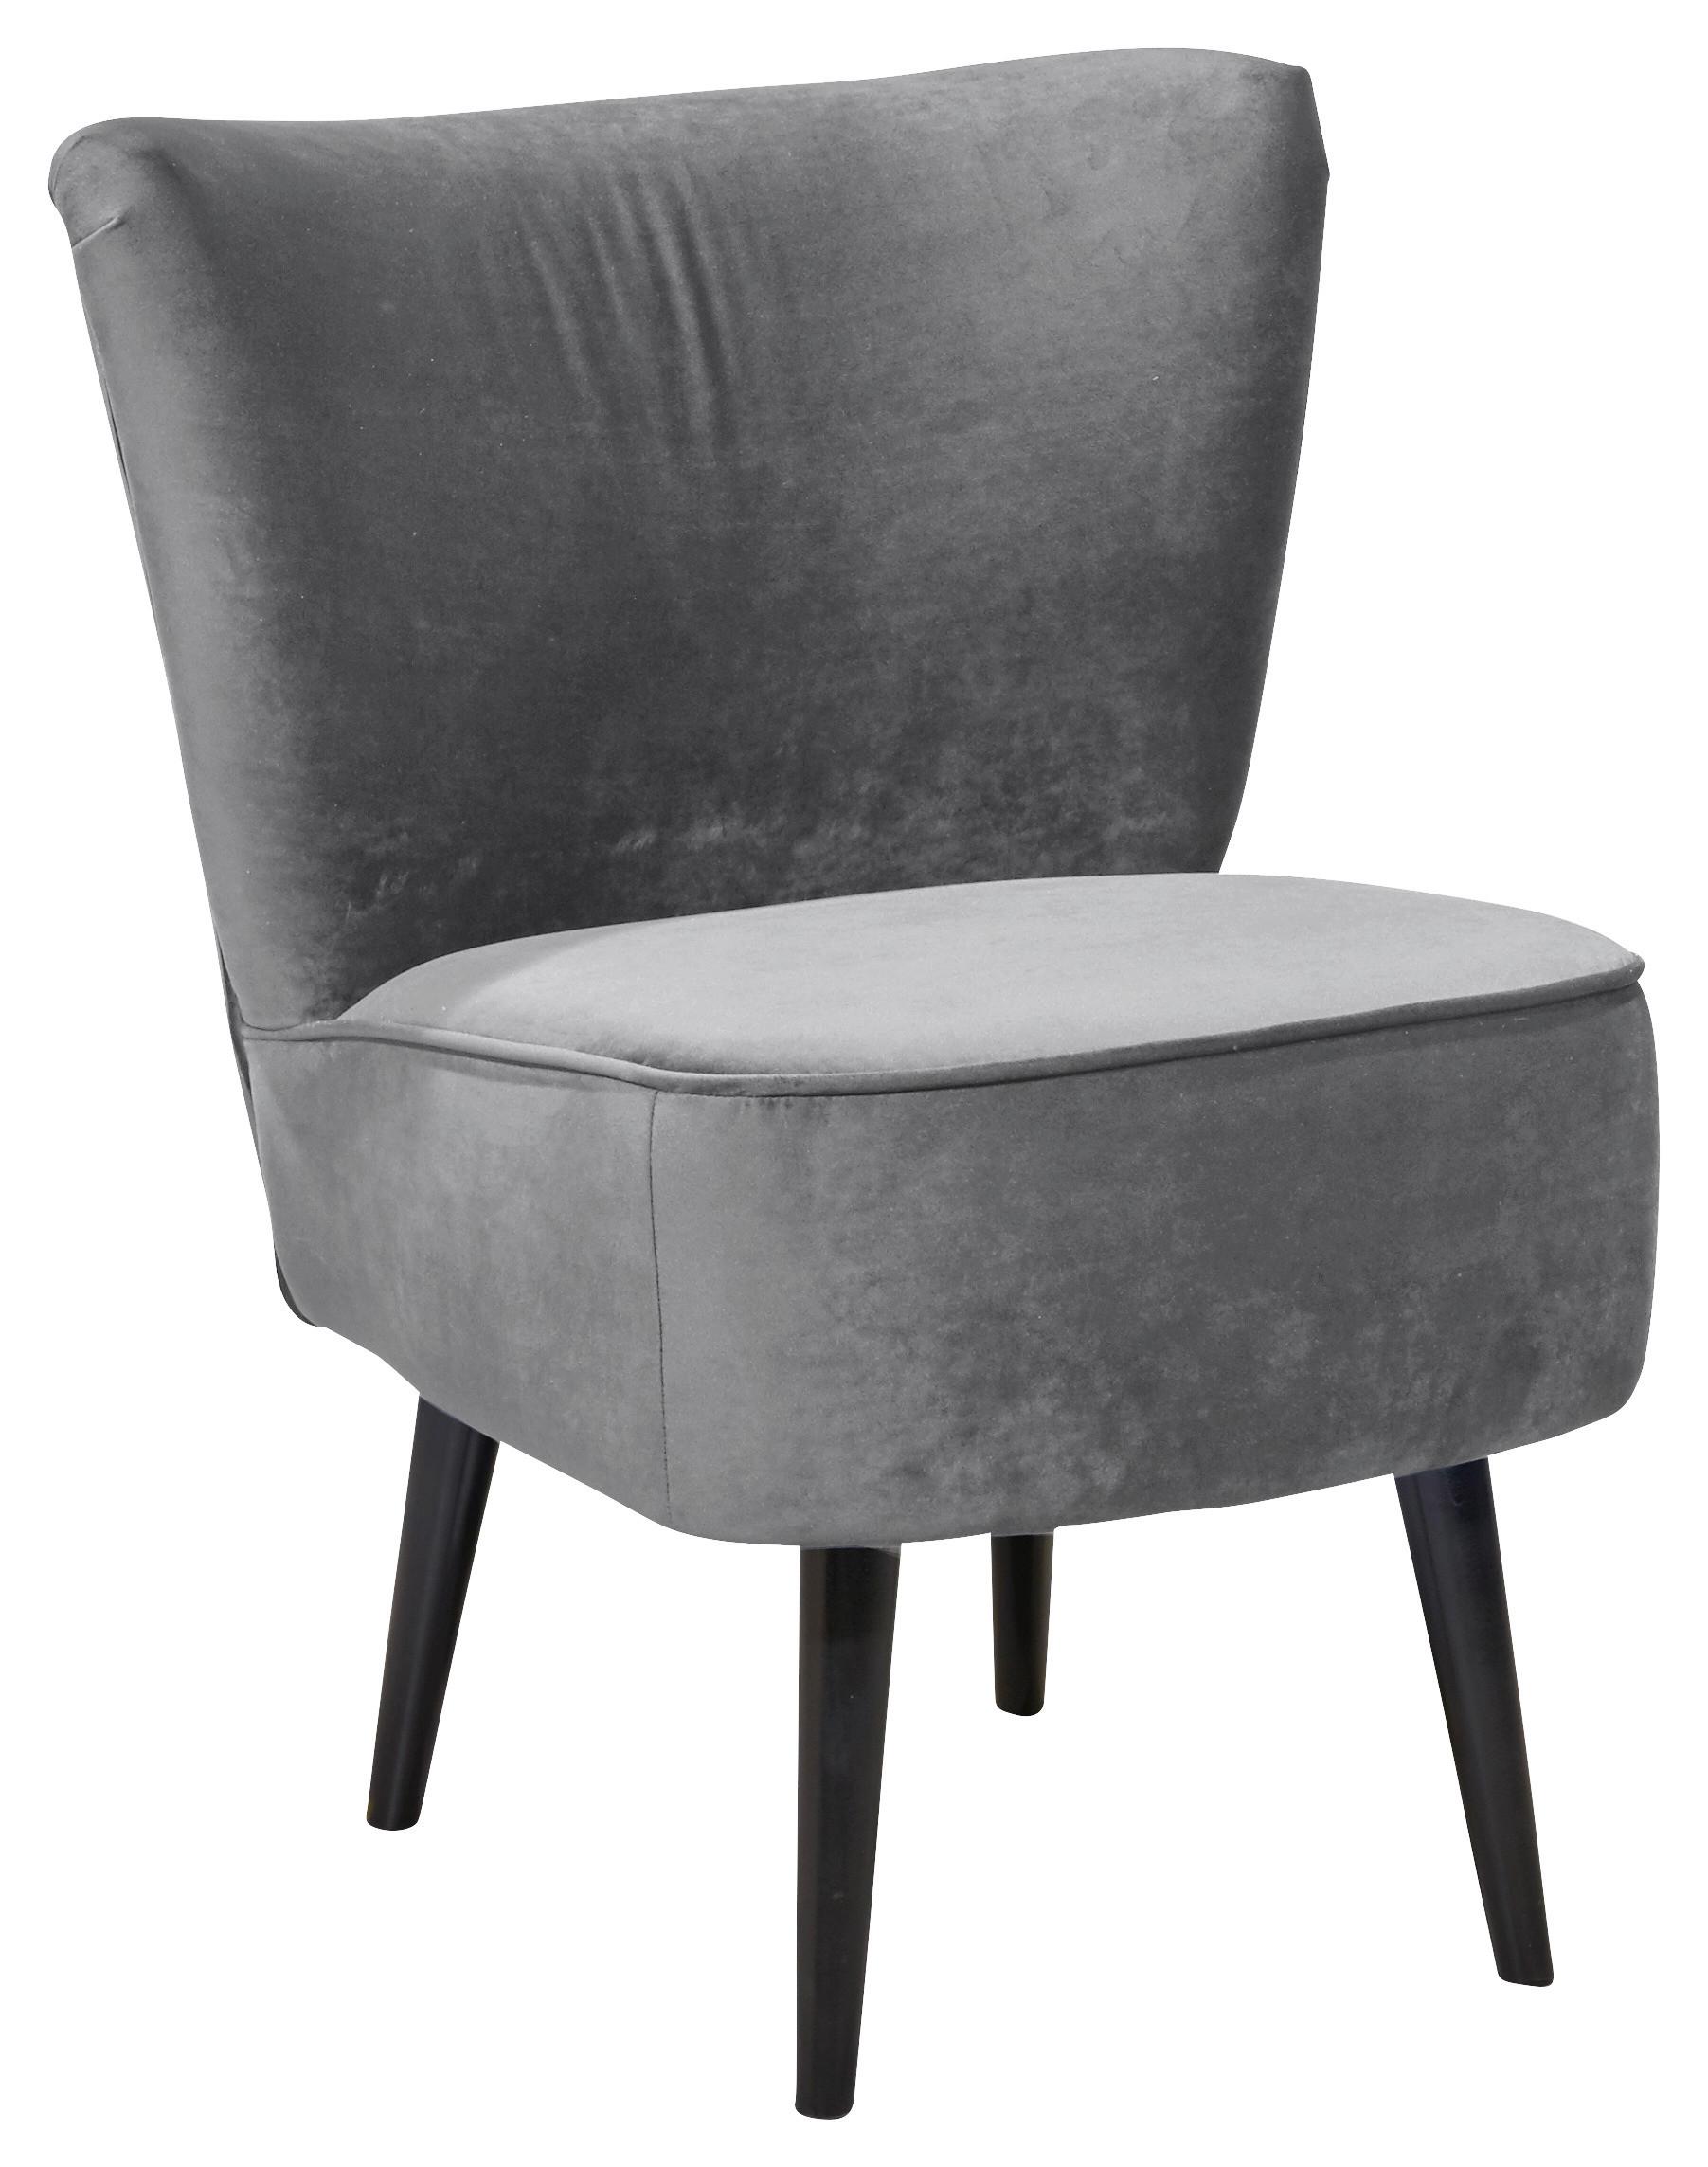 Fotelja Lord -Trend- - siva/crna, Trend, drvni materijal/tekstil (65/89/70cm) - MID.YOU